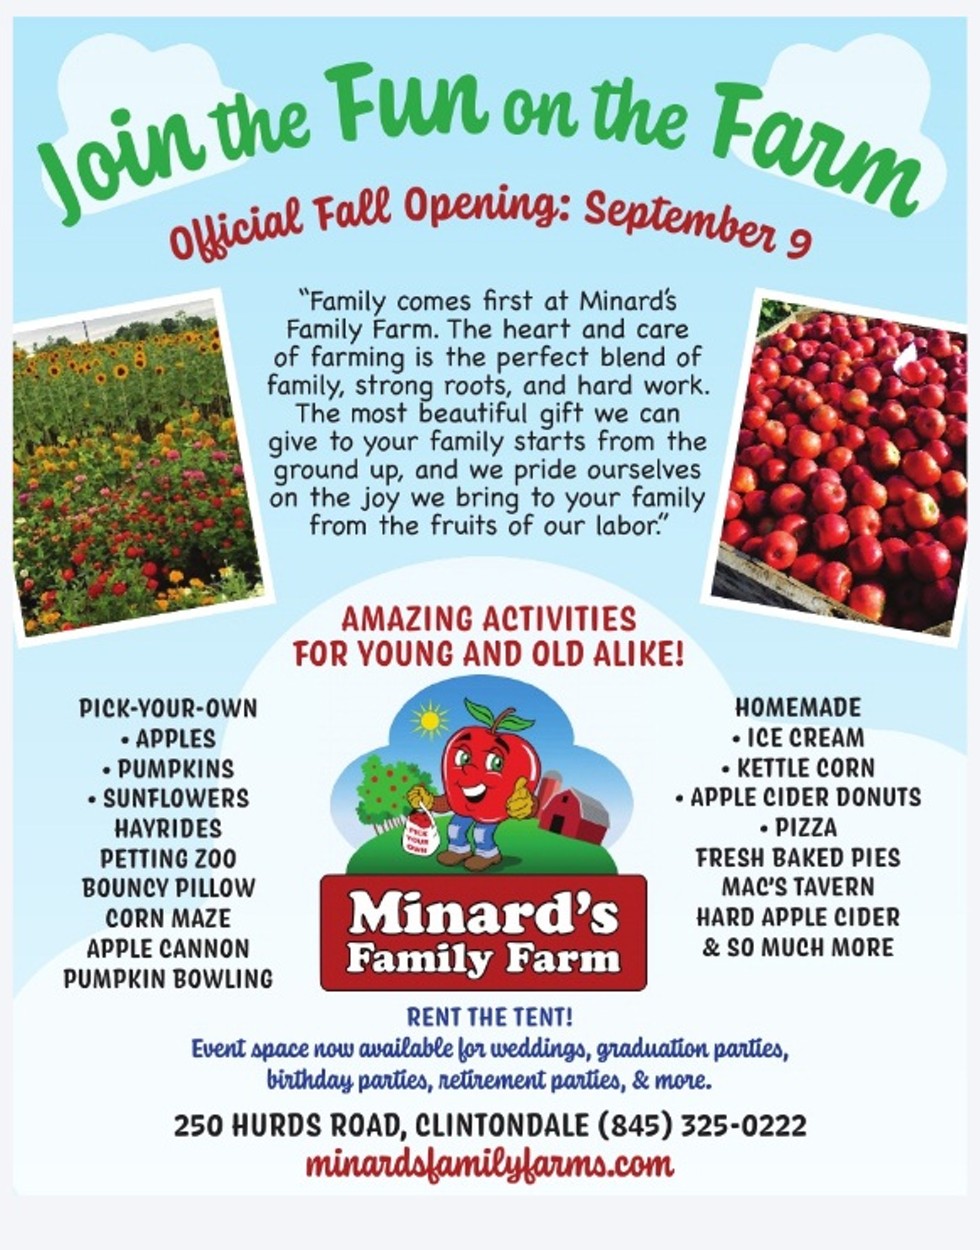 Minard's Family Farm Official Fall Opening September 9 2023